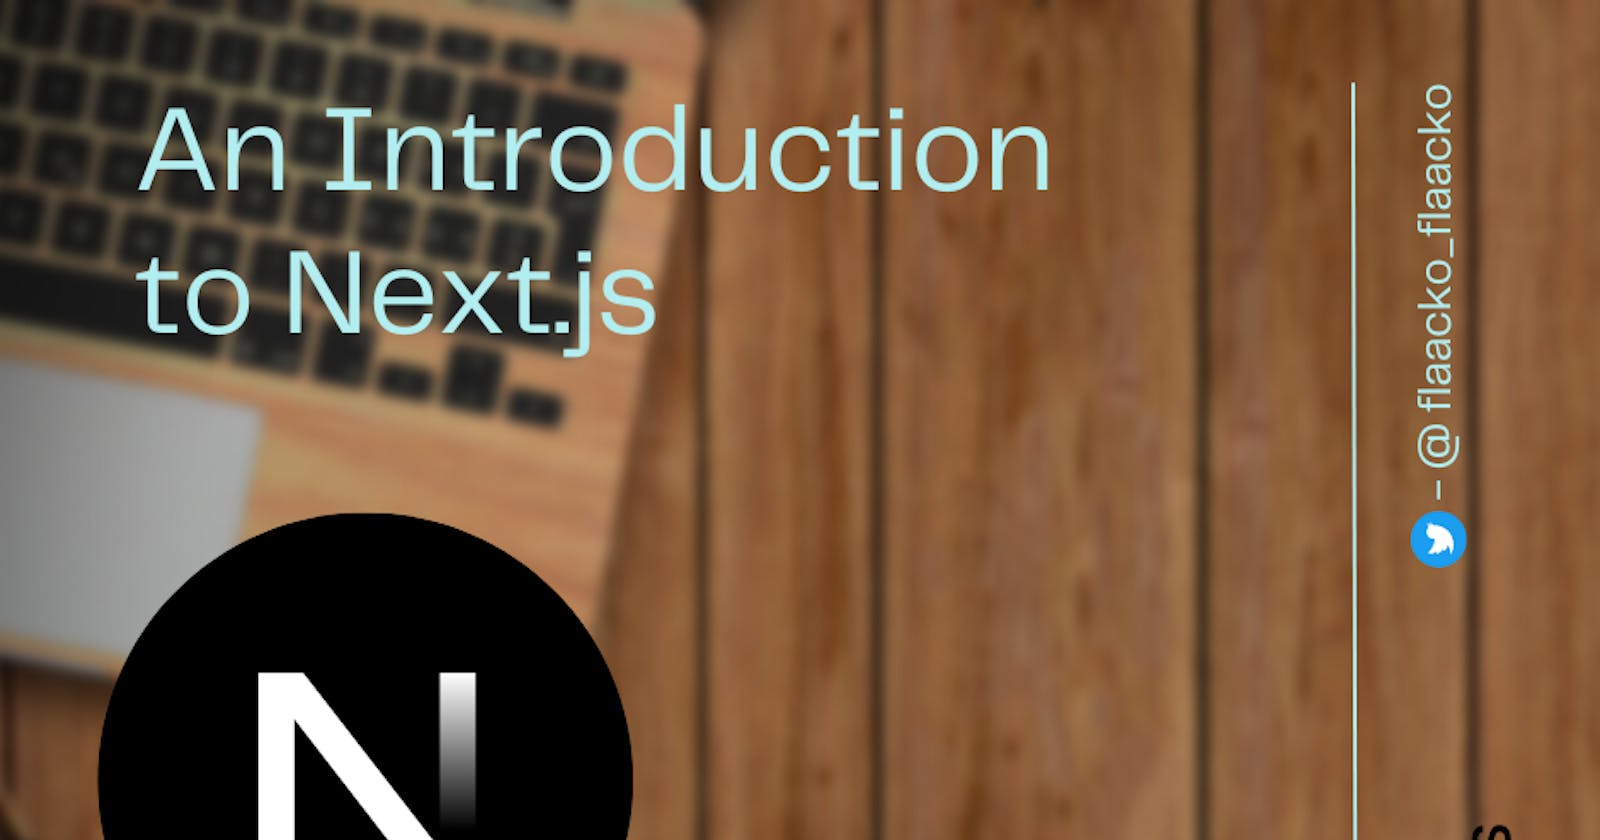 An Introduction to Next.js